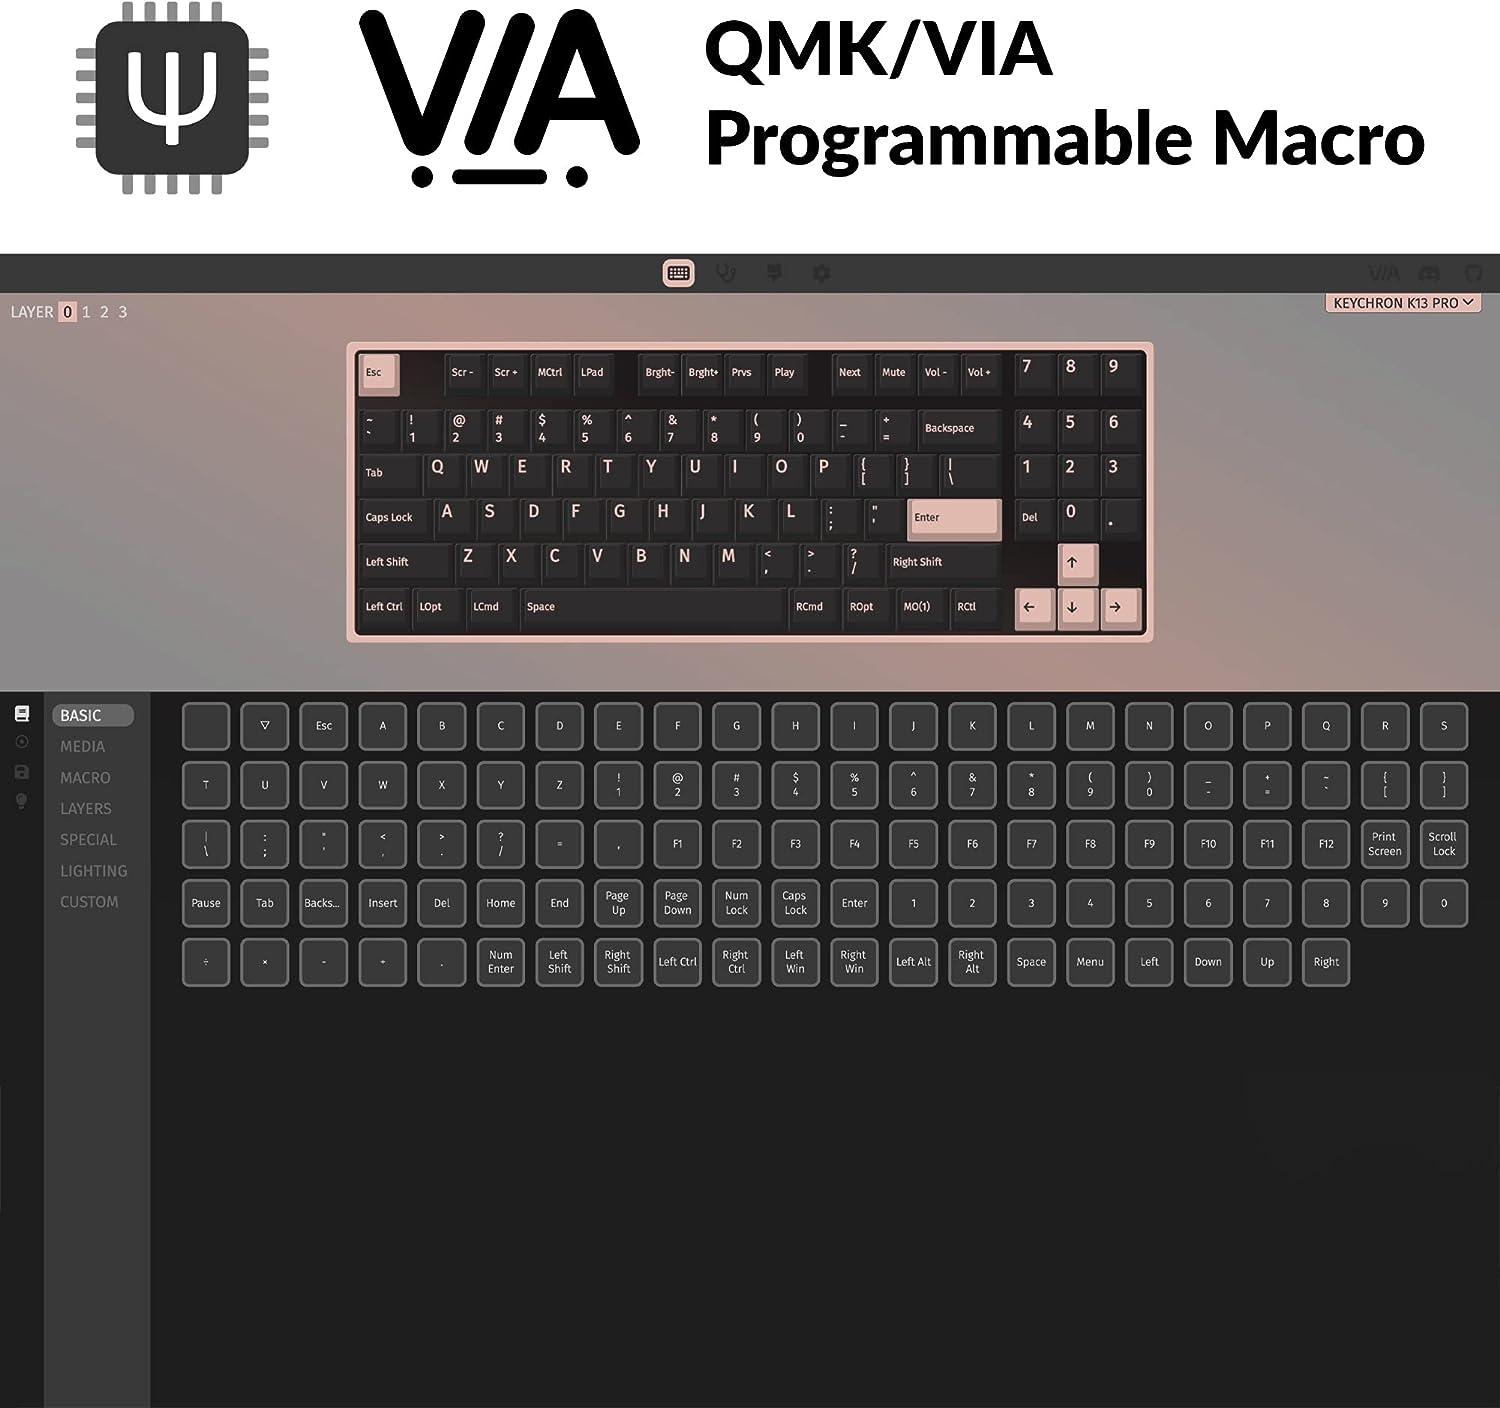 Keychron K13 Pro Ultra-Slim QMK/VIA Wireless Mechanical Keyboard